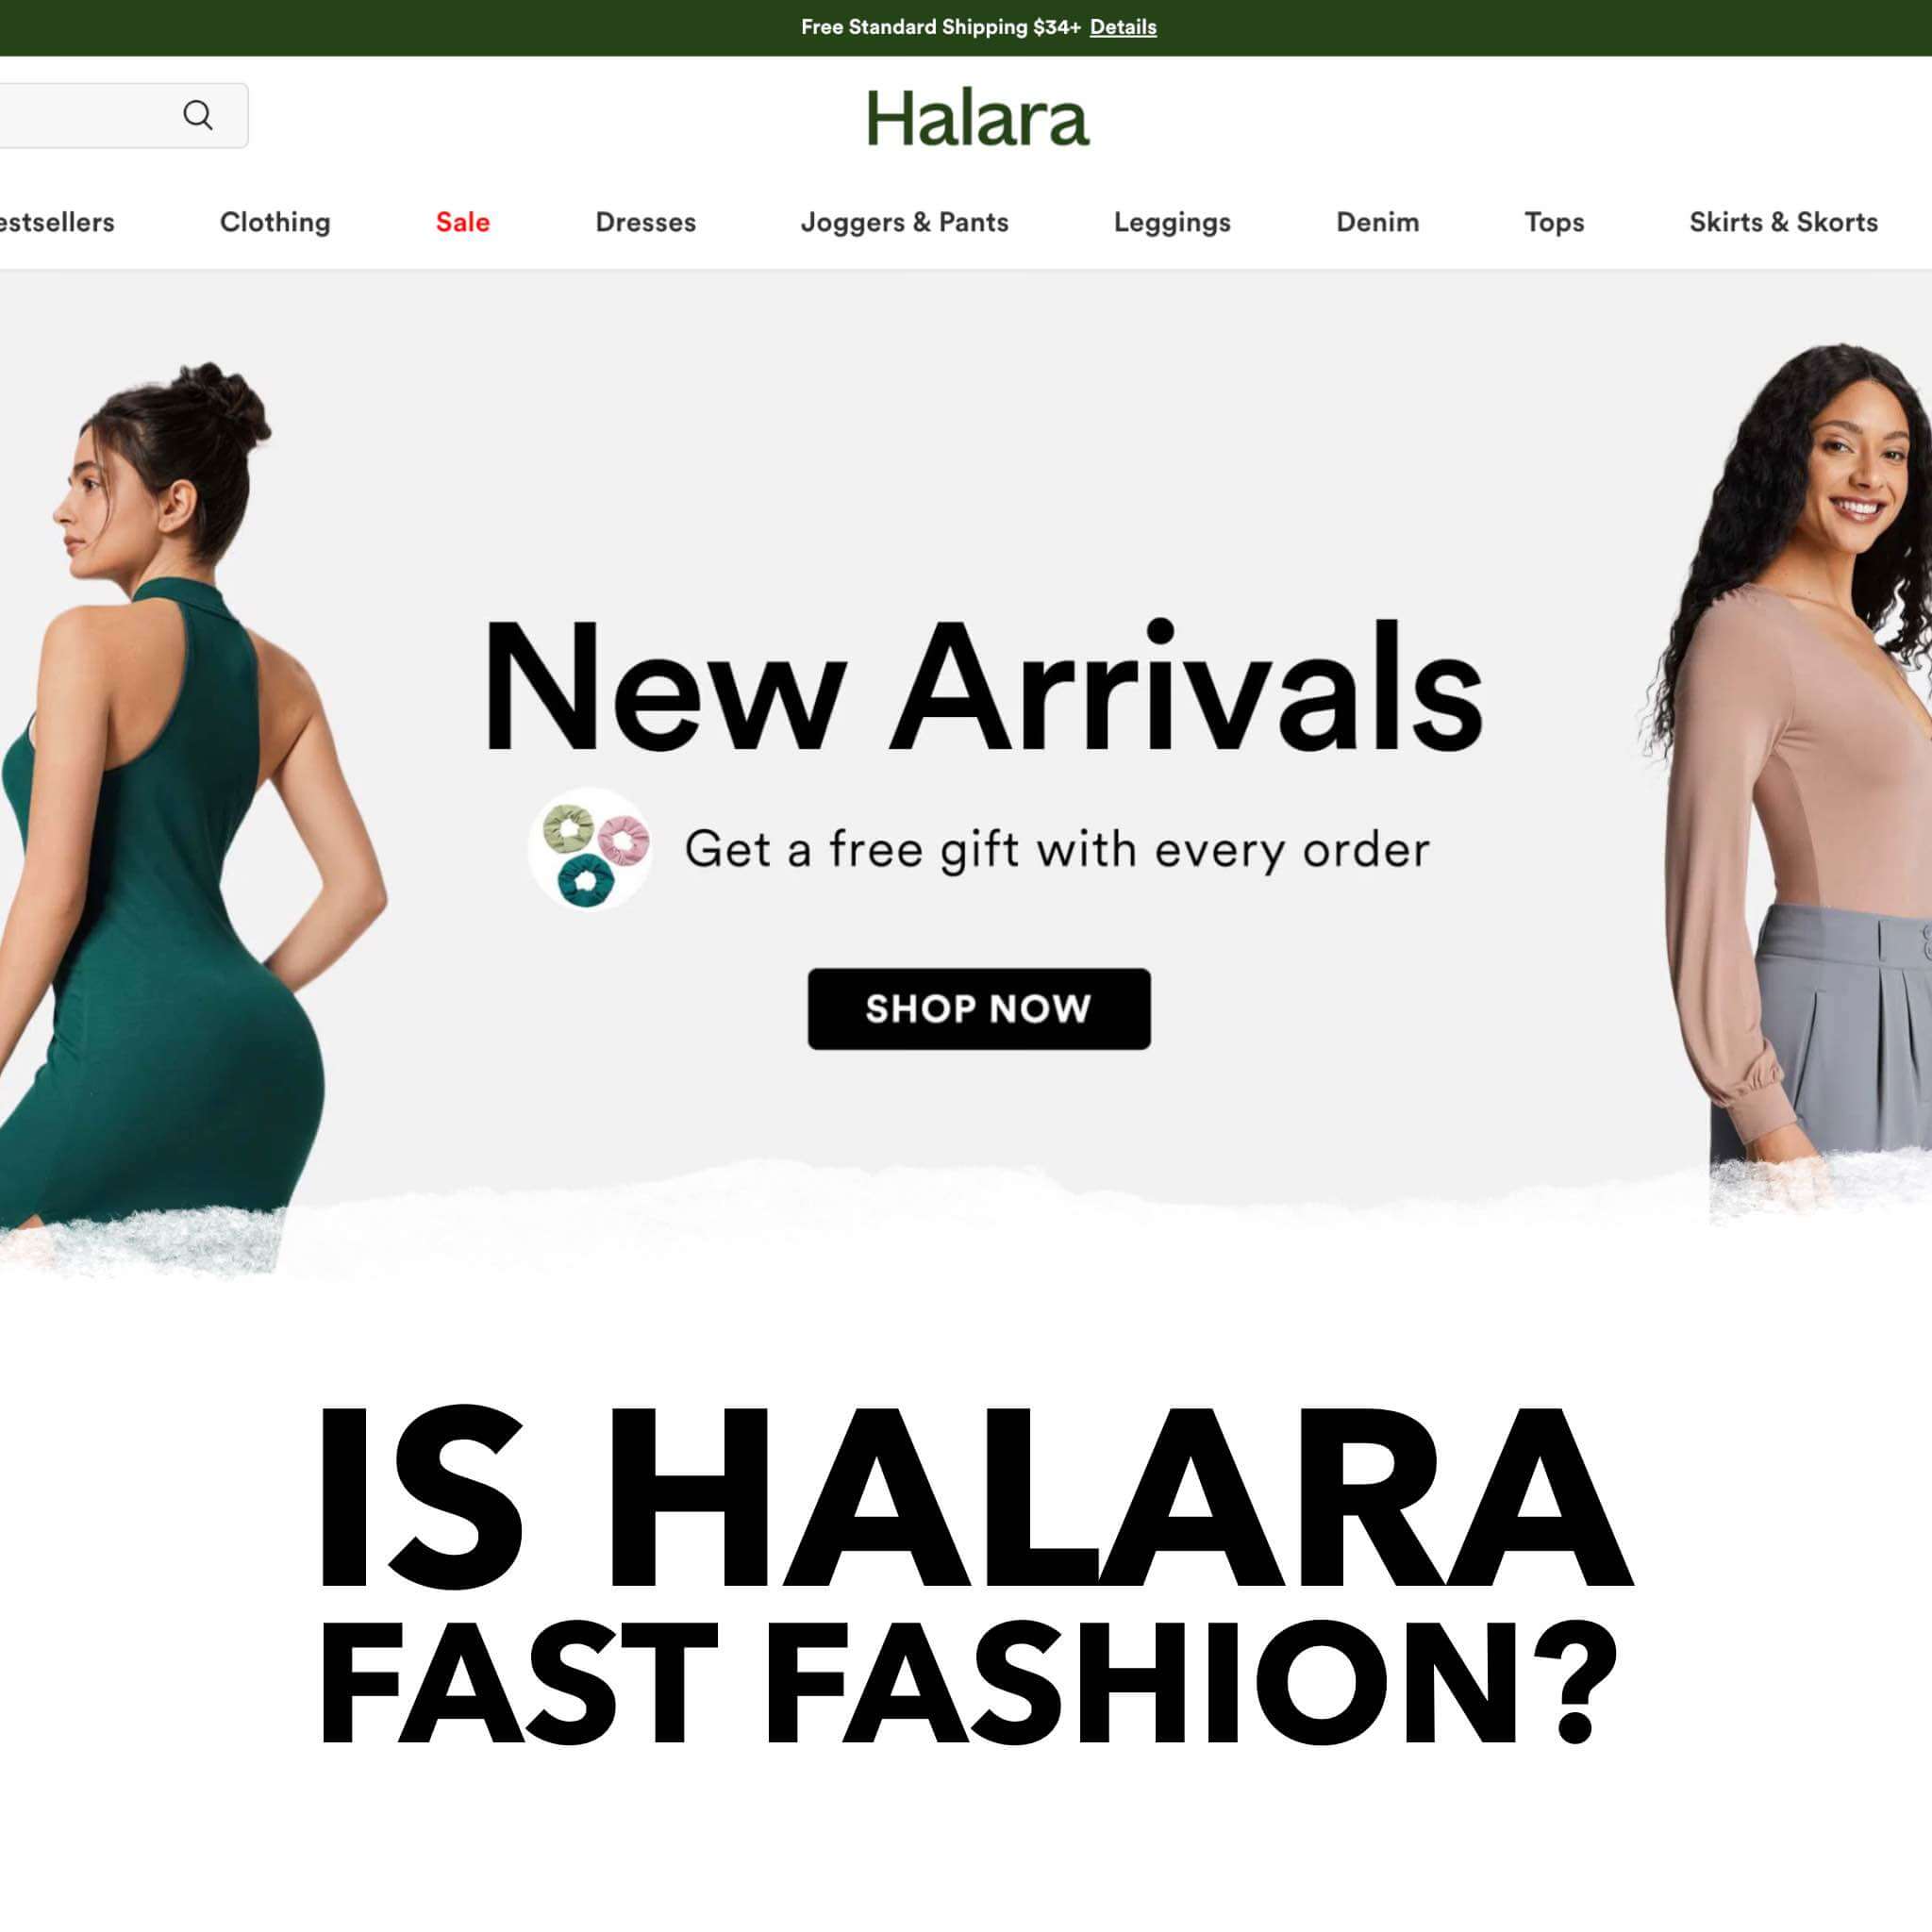 Is Halara Fast Fashion?